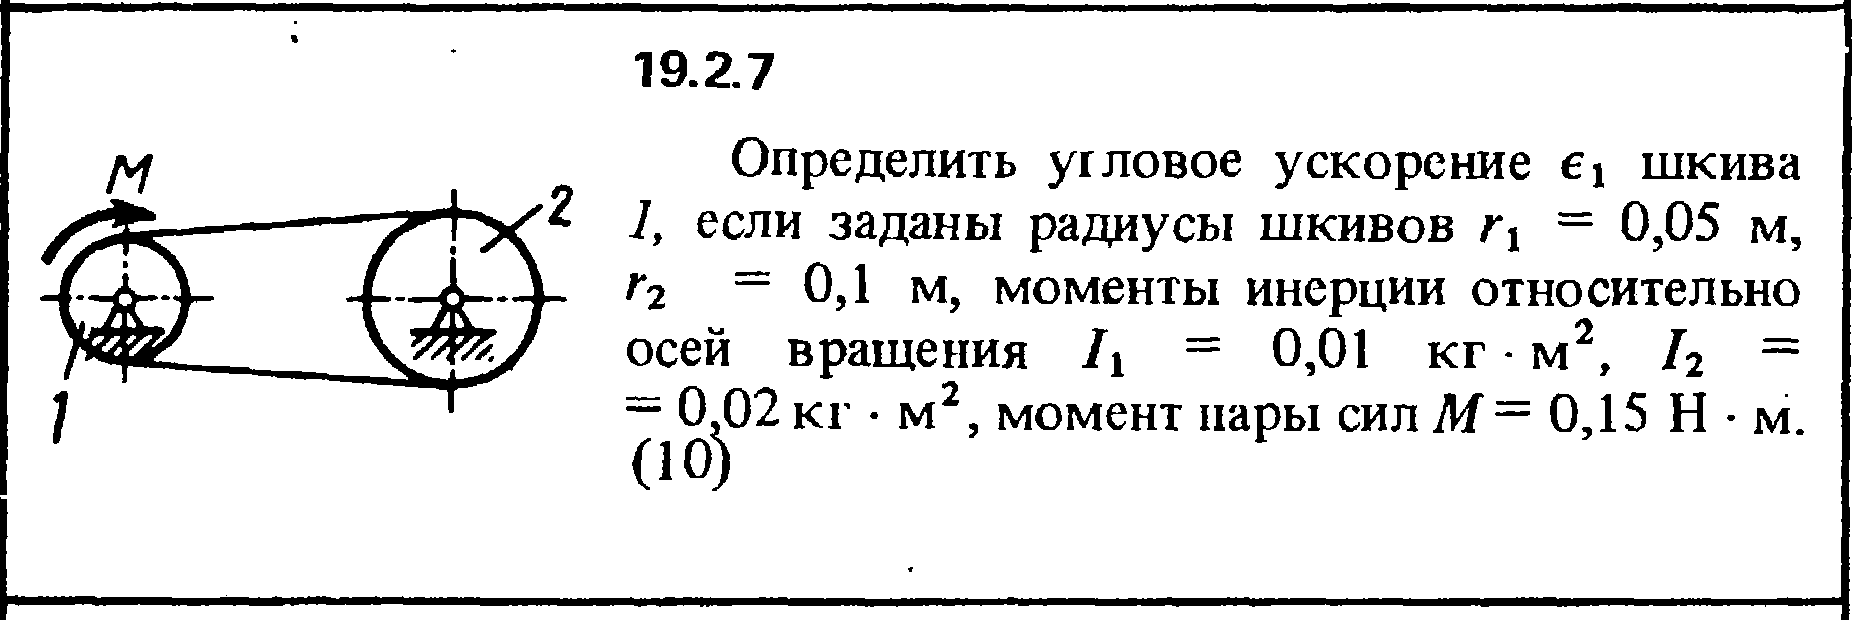 Решение 19.2.7 из сборника (решебника) Кепе О.Е. 1989